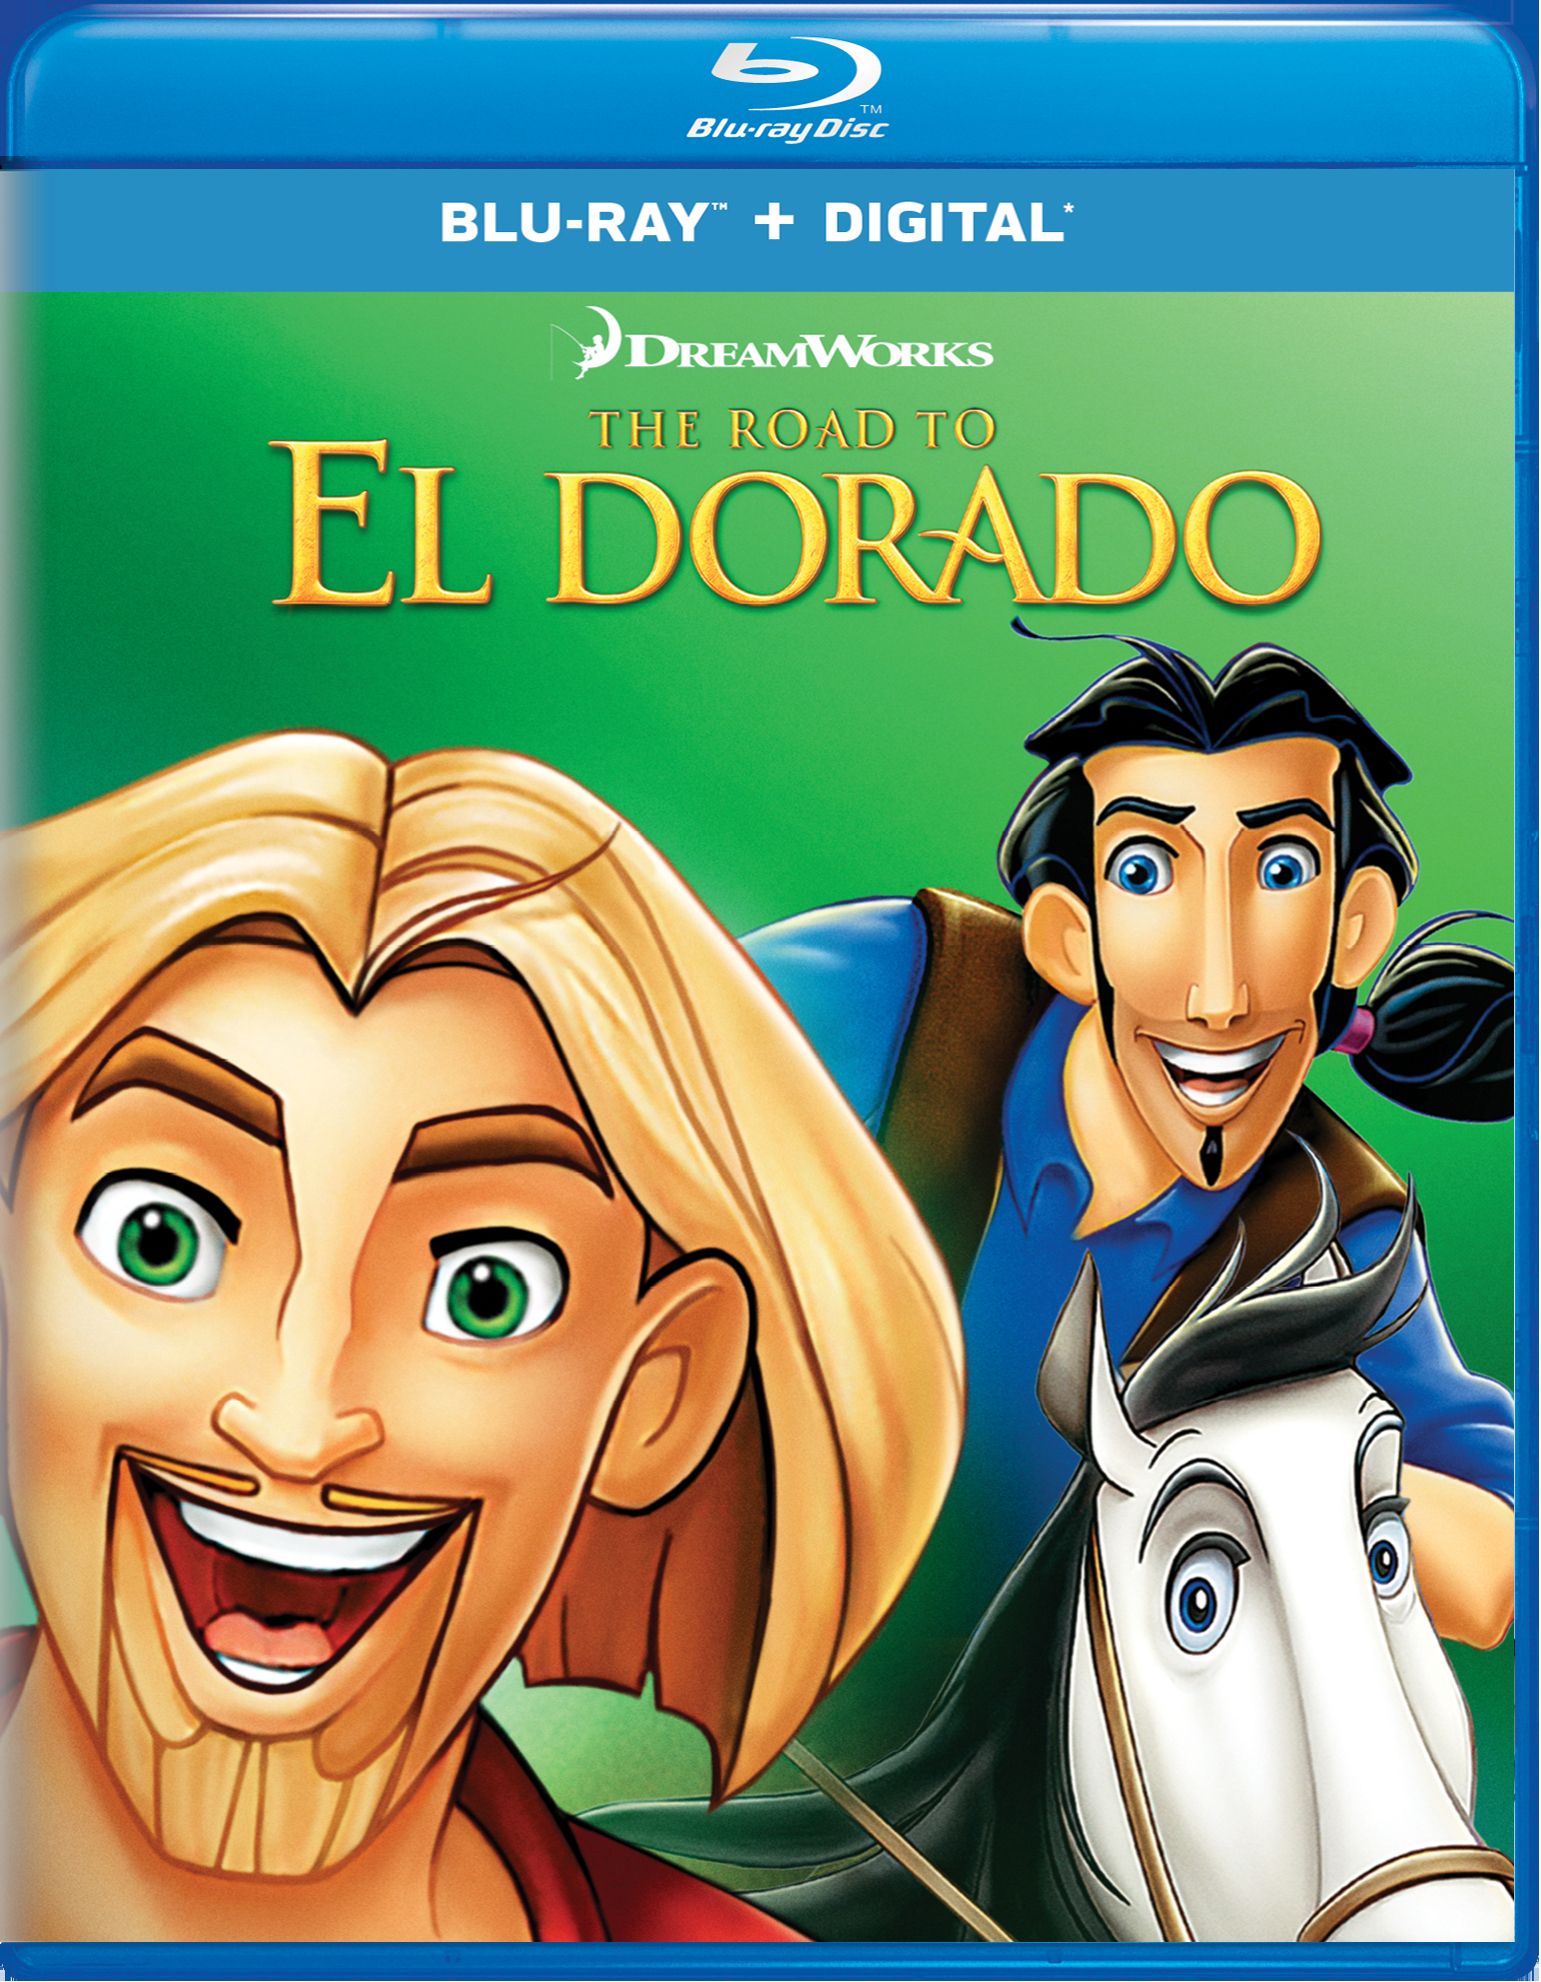 The Road To El Dorado (Blu-ray + Digital HD) - Blu-ray [ 2000 ]  - Children Movies On Blu-ray - Movies On GRUV